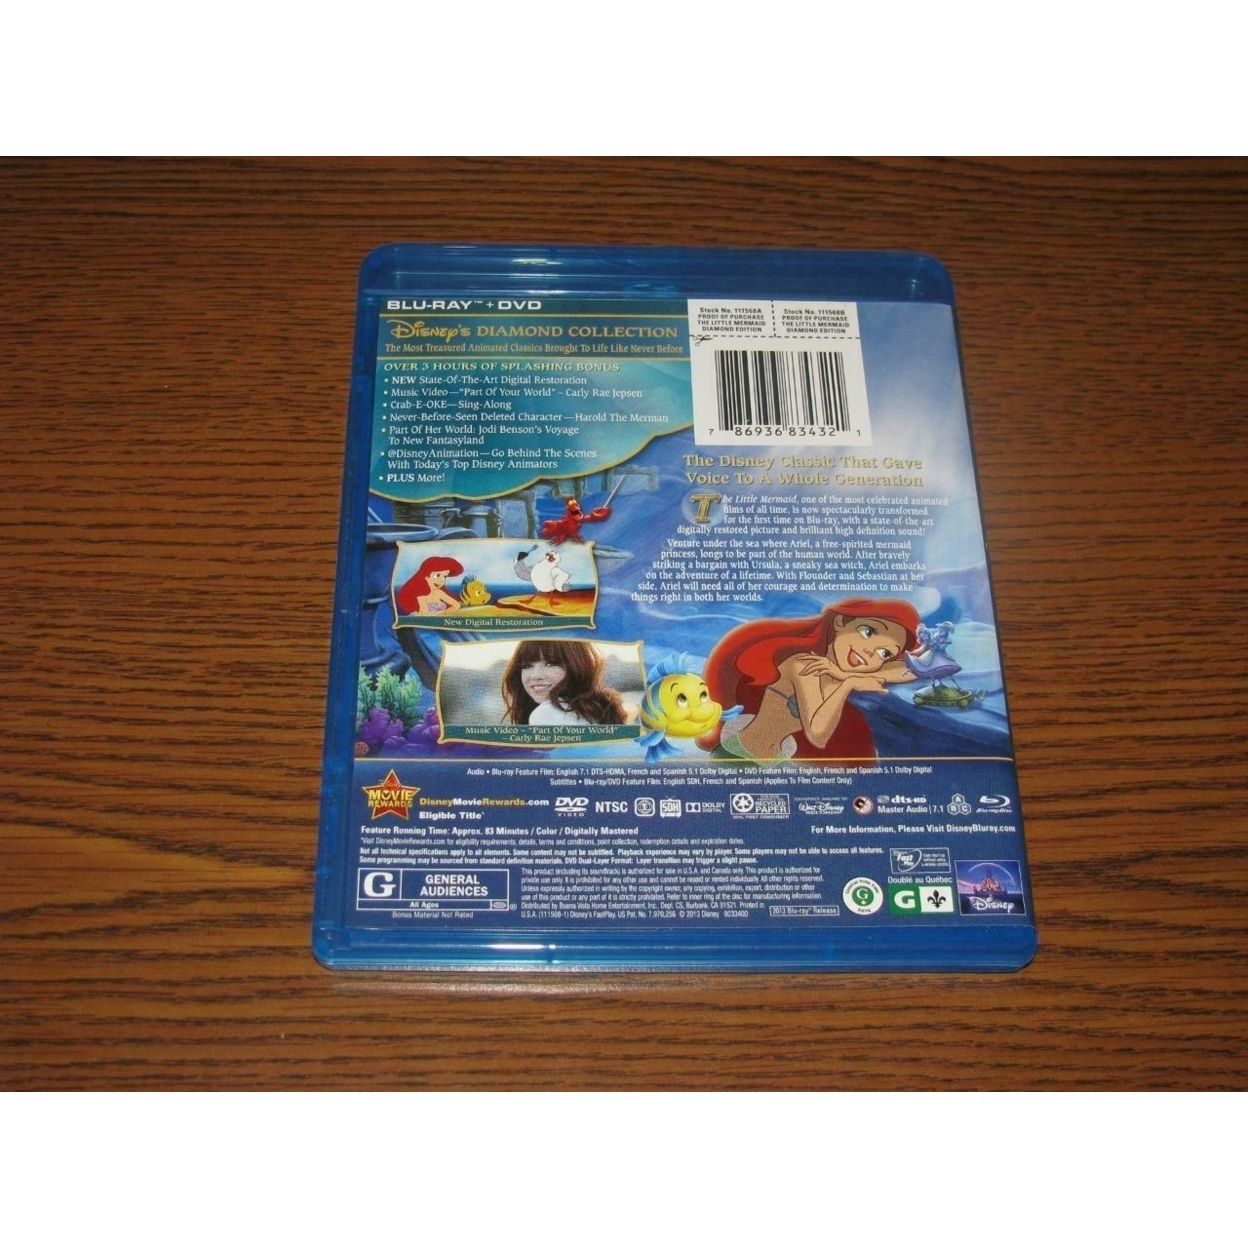 The Little Mermaid: Diamond Edition (Blu-ray + DVD + Digital Copy) - image 3 of 3